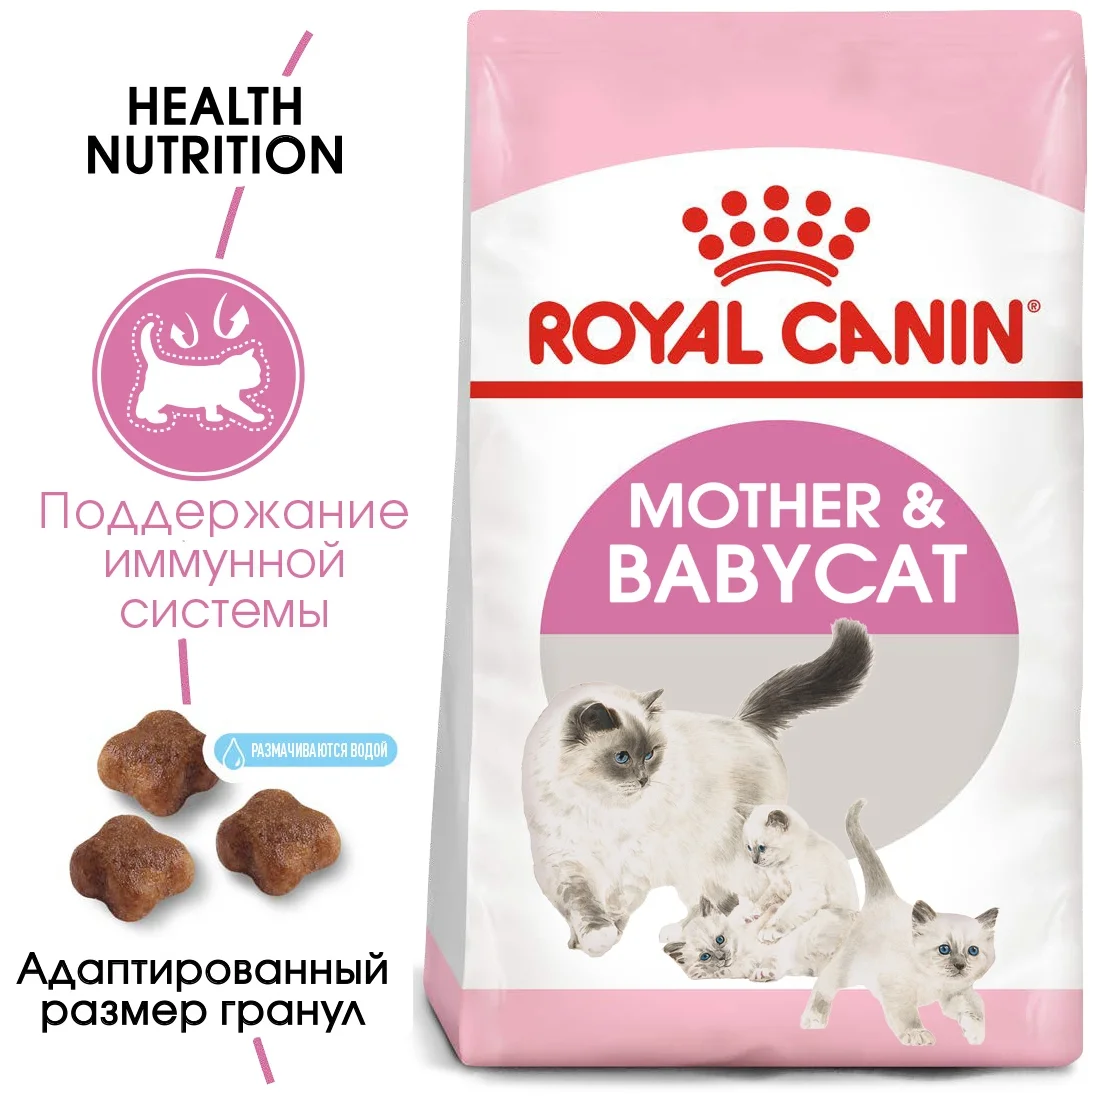 Royal Canin "Mother & Babycat" - класс ингредиентов: премиум